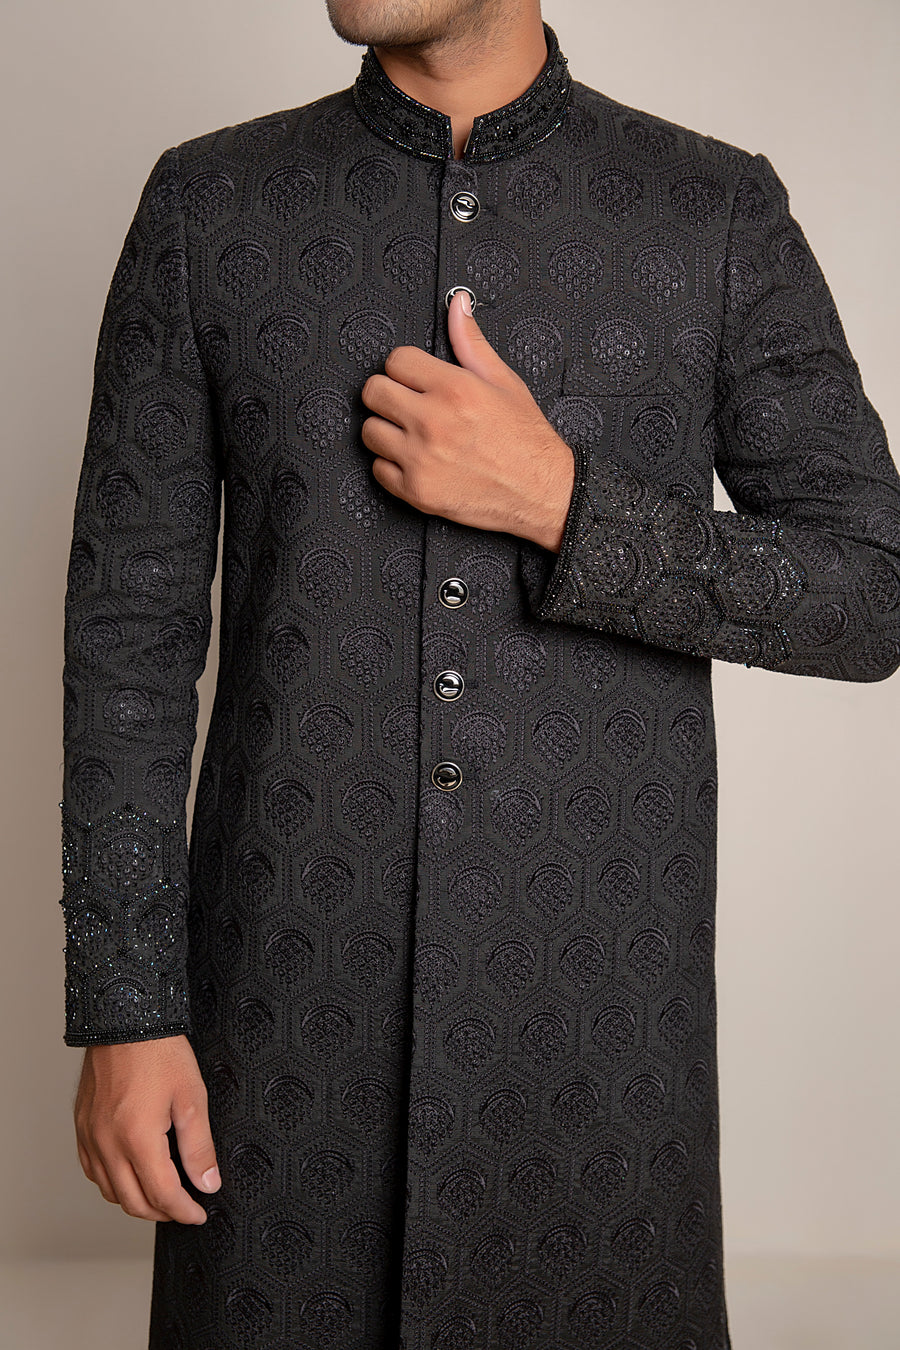 Black Embroidered (sequins) Sherwani